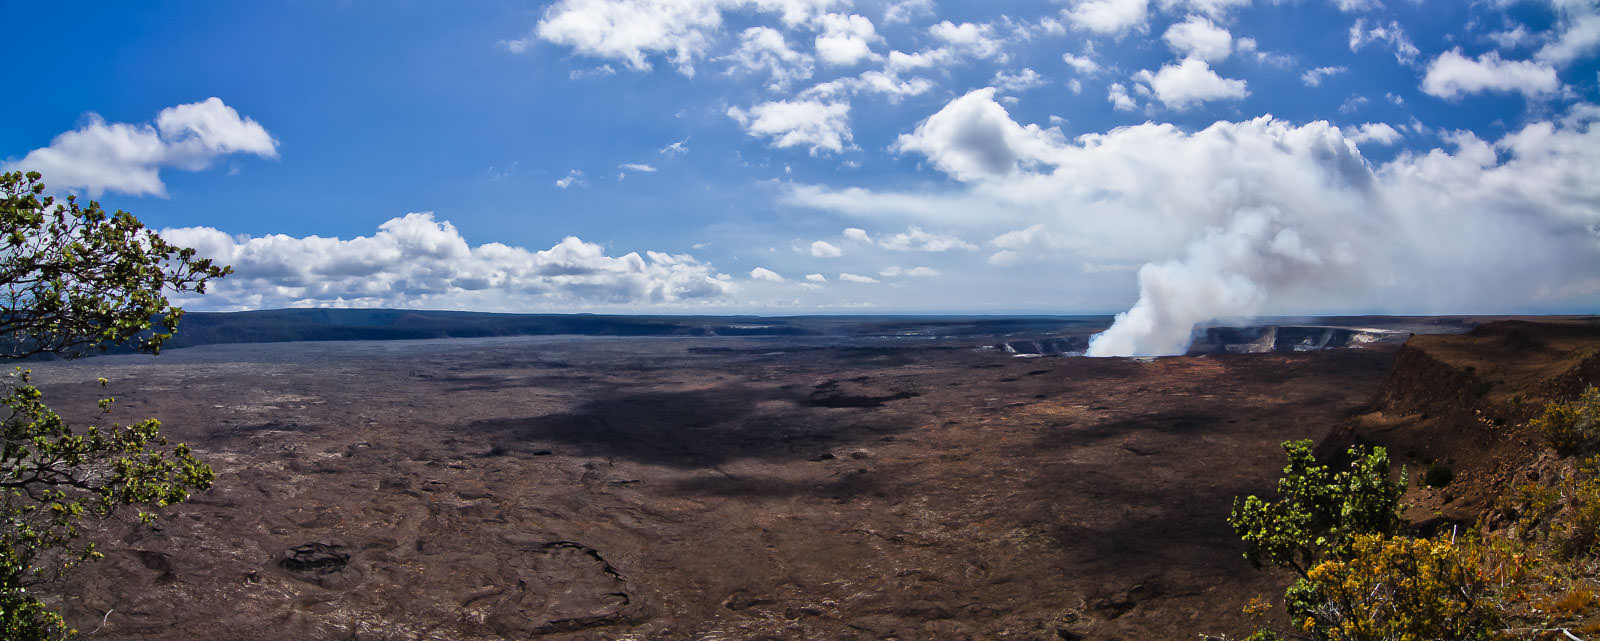 Kau Desert Trl, Volcano, Hawaii, United States